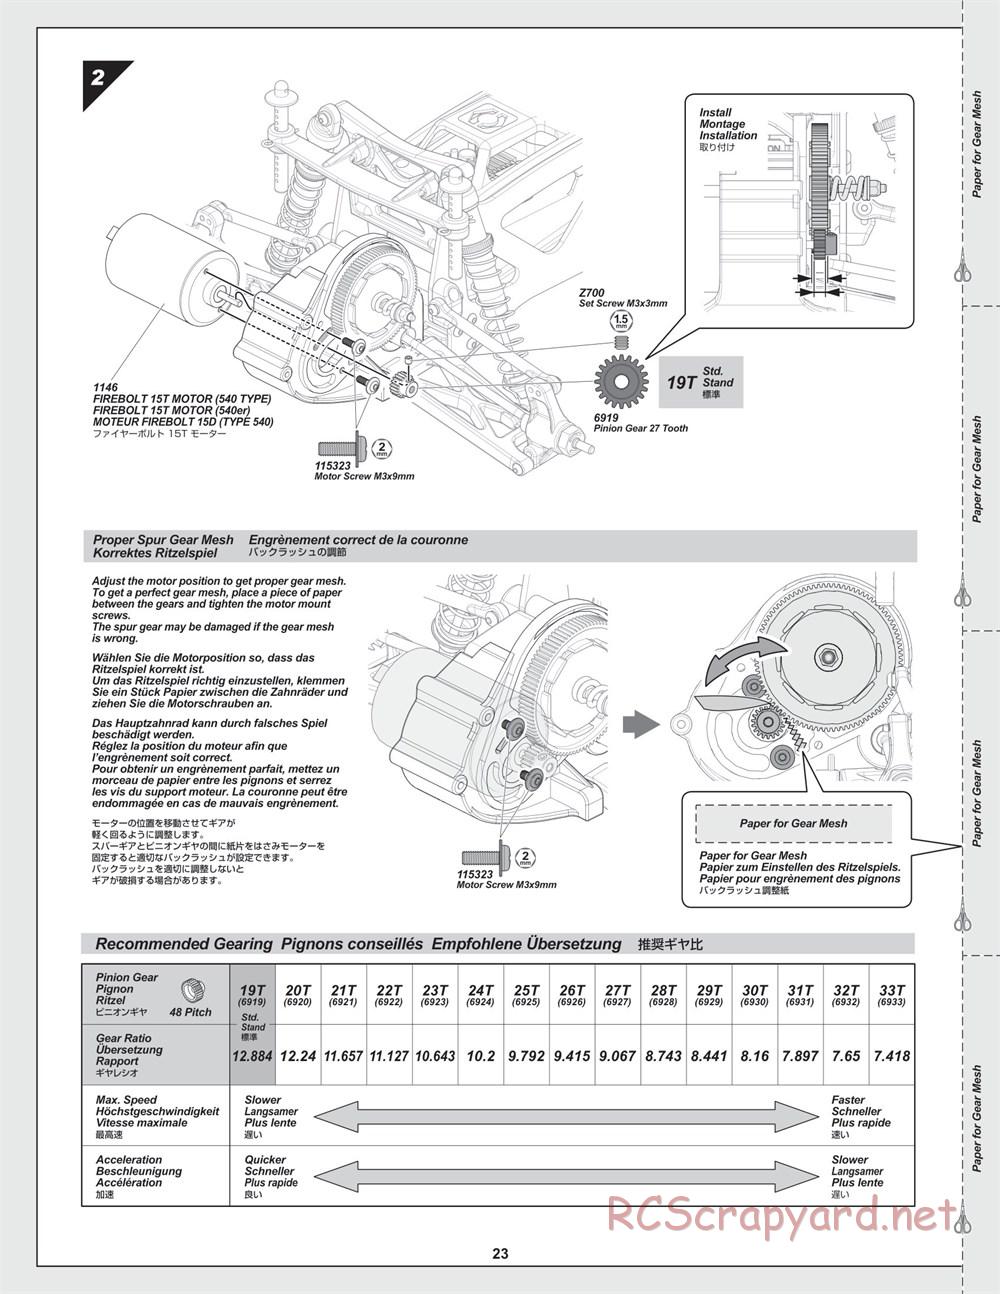 HPI - Jumpshot MT - Manual - Page 23